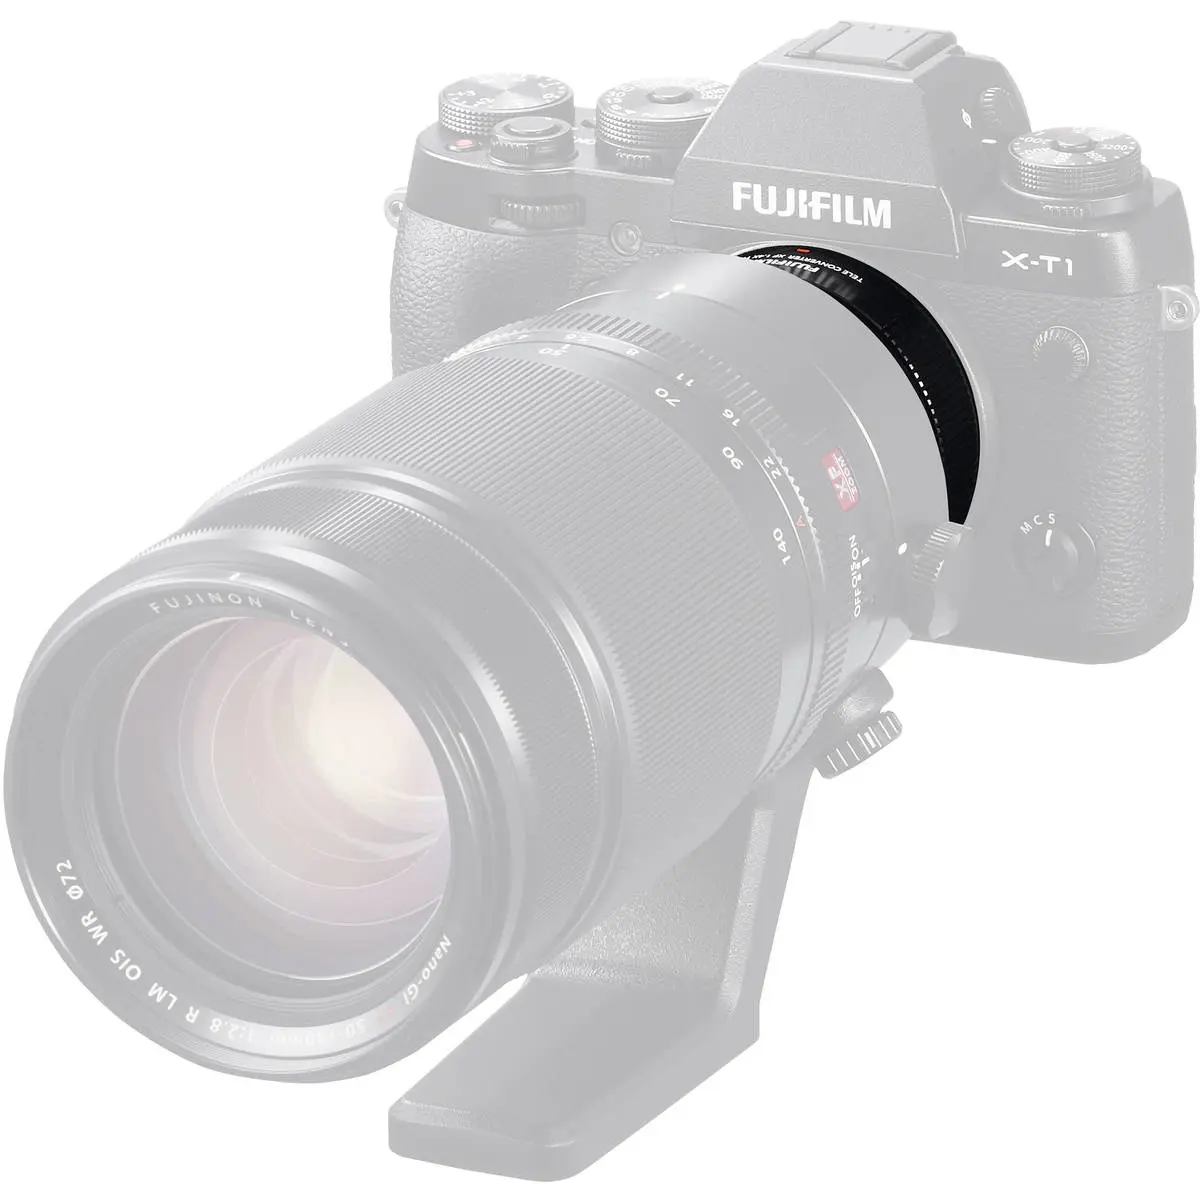 2. Fujifilm FUJINON XF 1.4X TC WR Teleconverter Lens